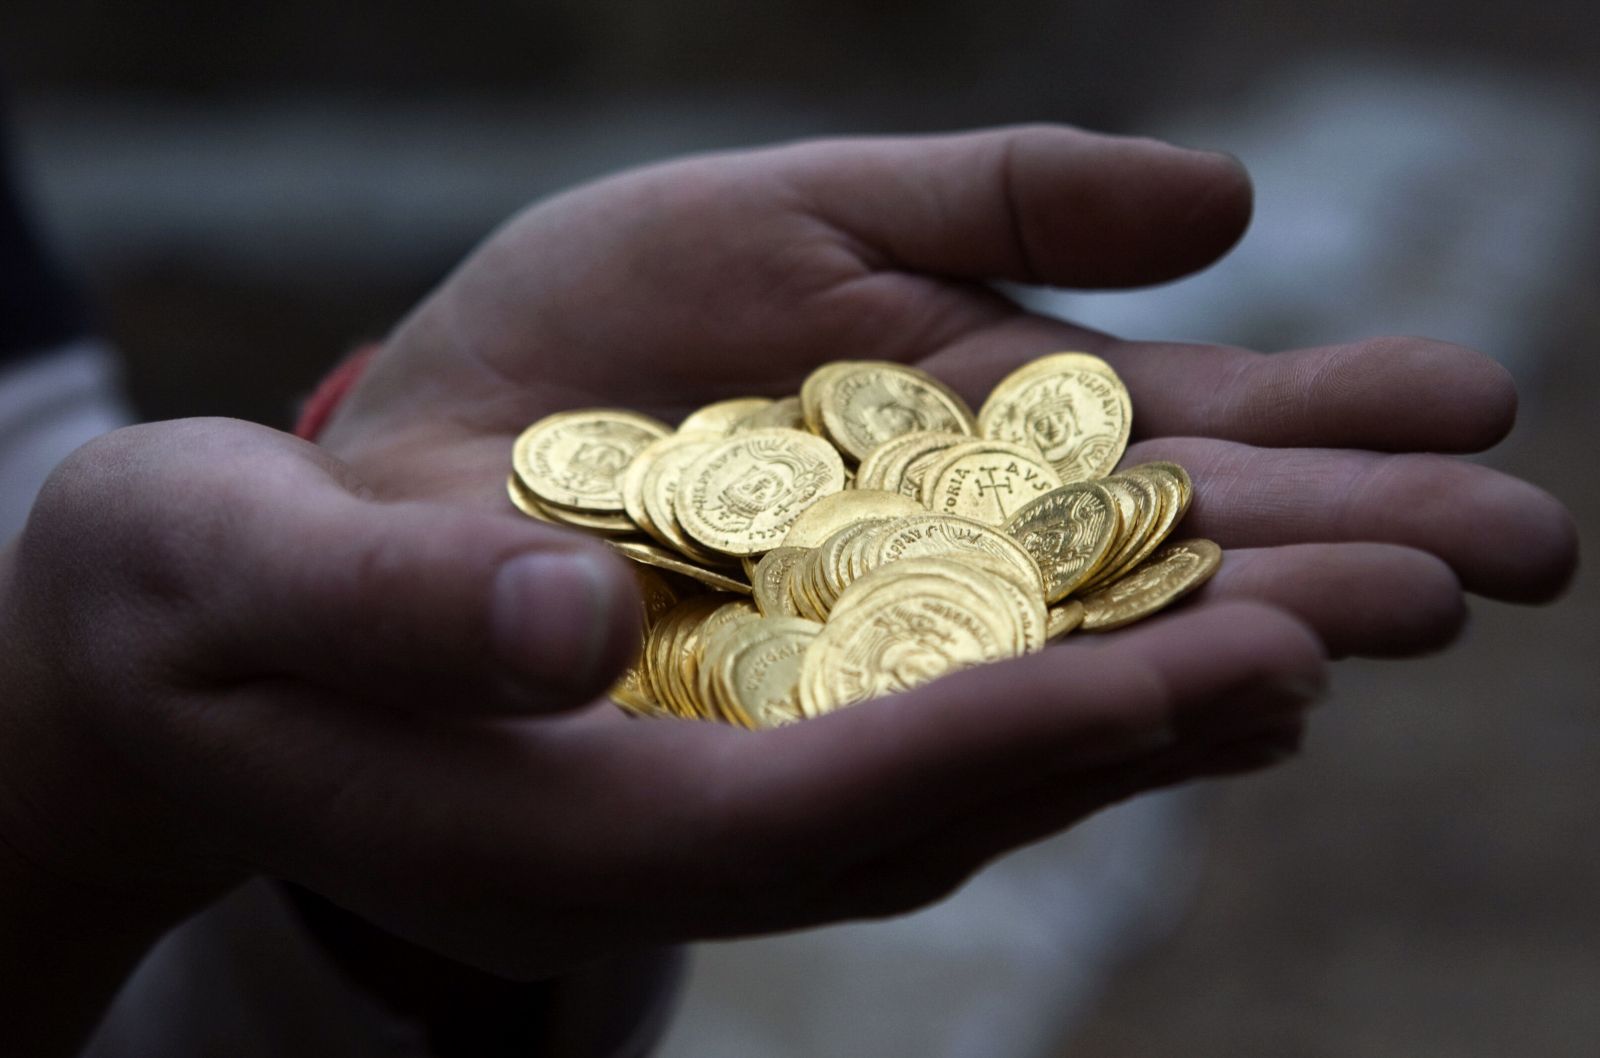 Откуп монетами. Золото монеты. Золотые монеты в руках. Золотая Монетка в руке. Горсть золотых монет.